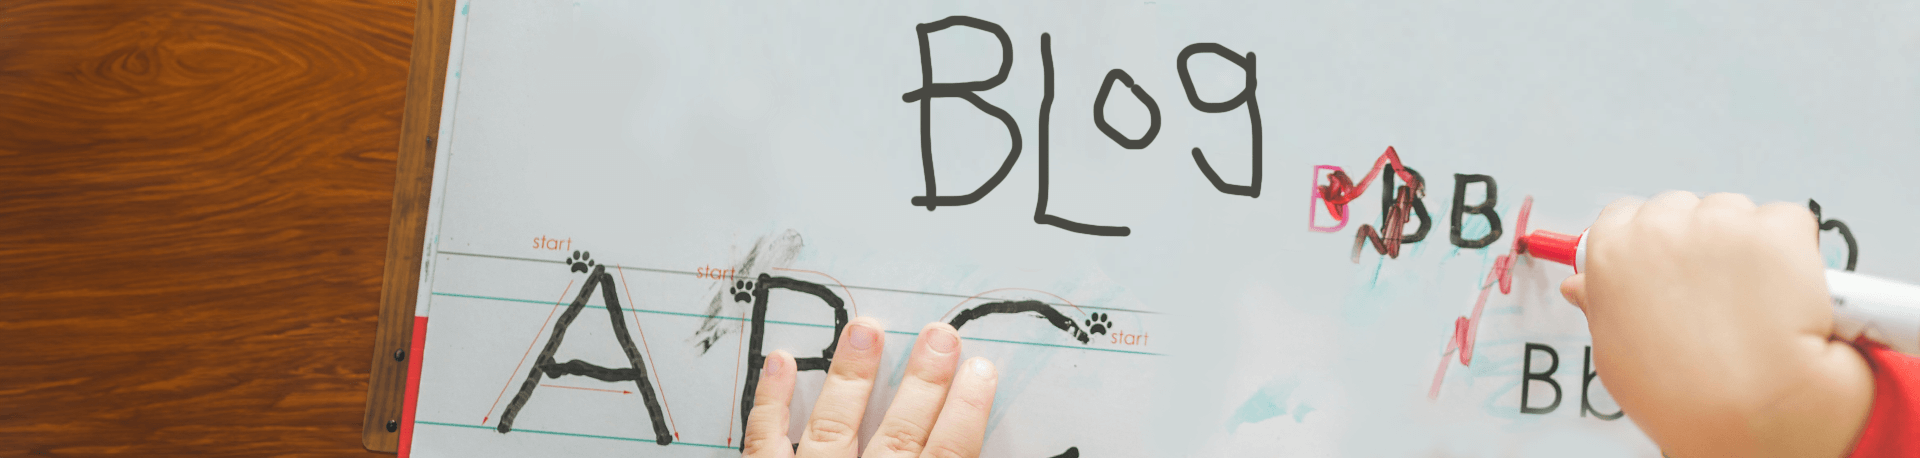 Preschool Blog